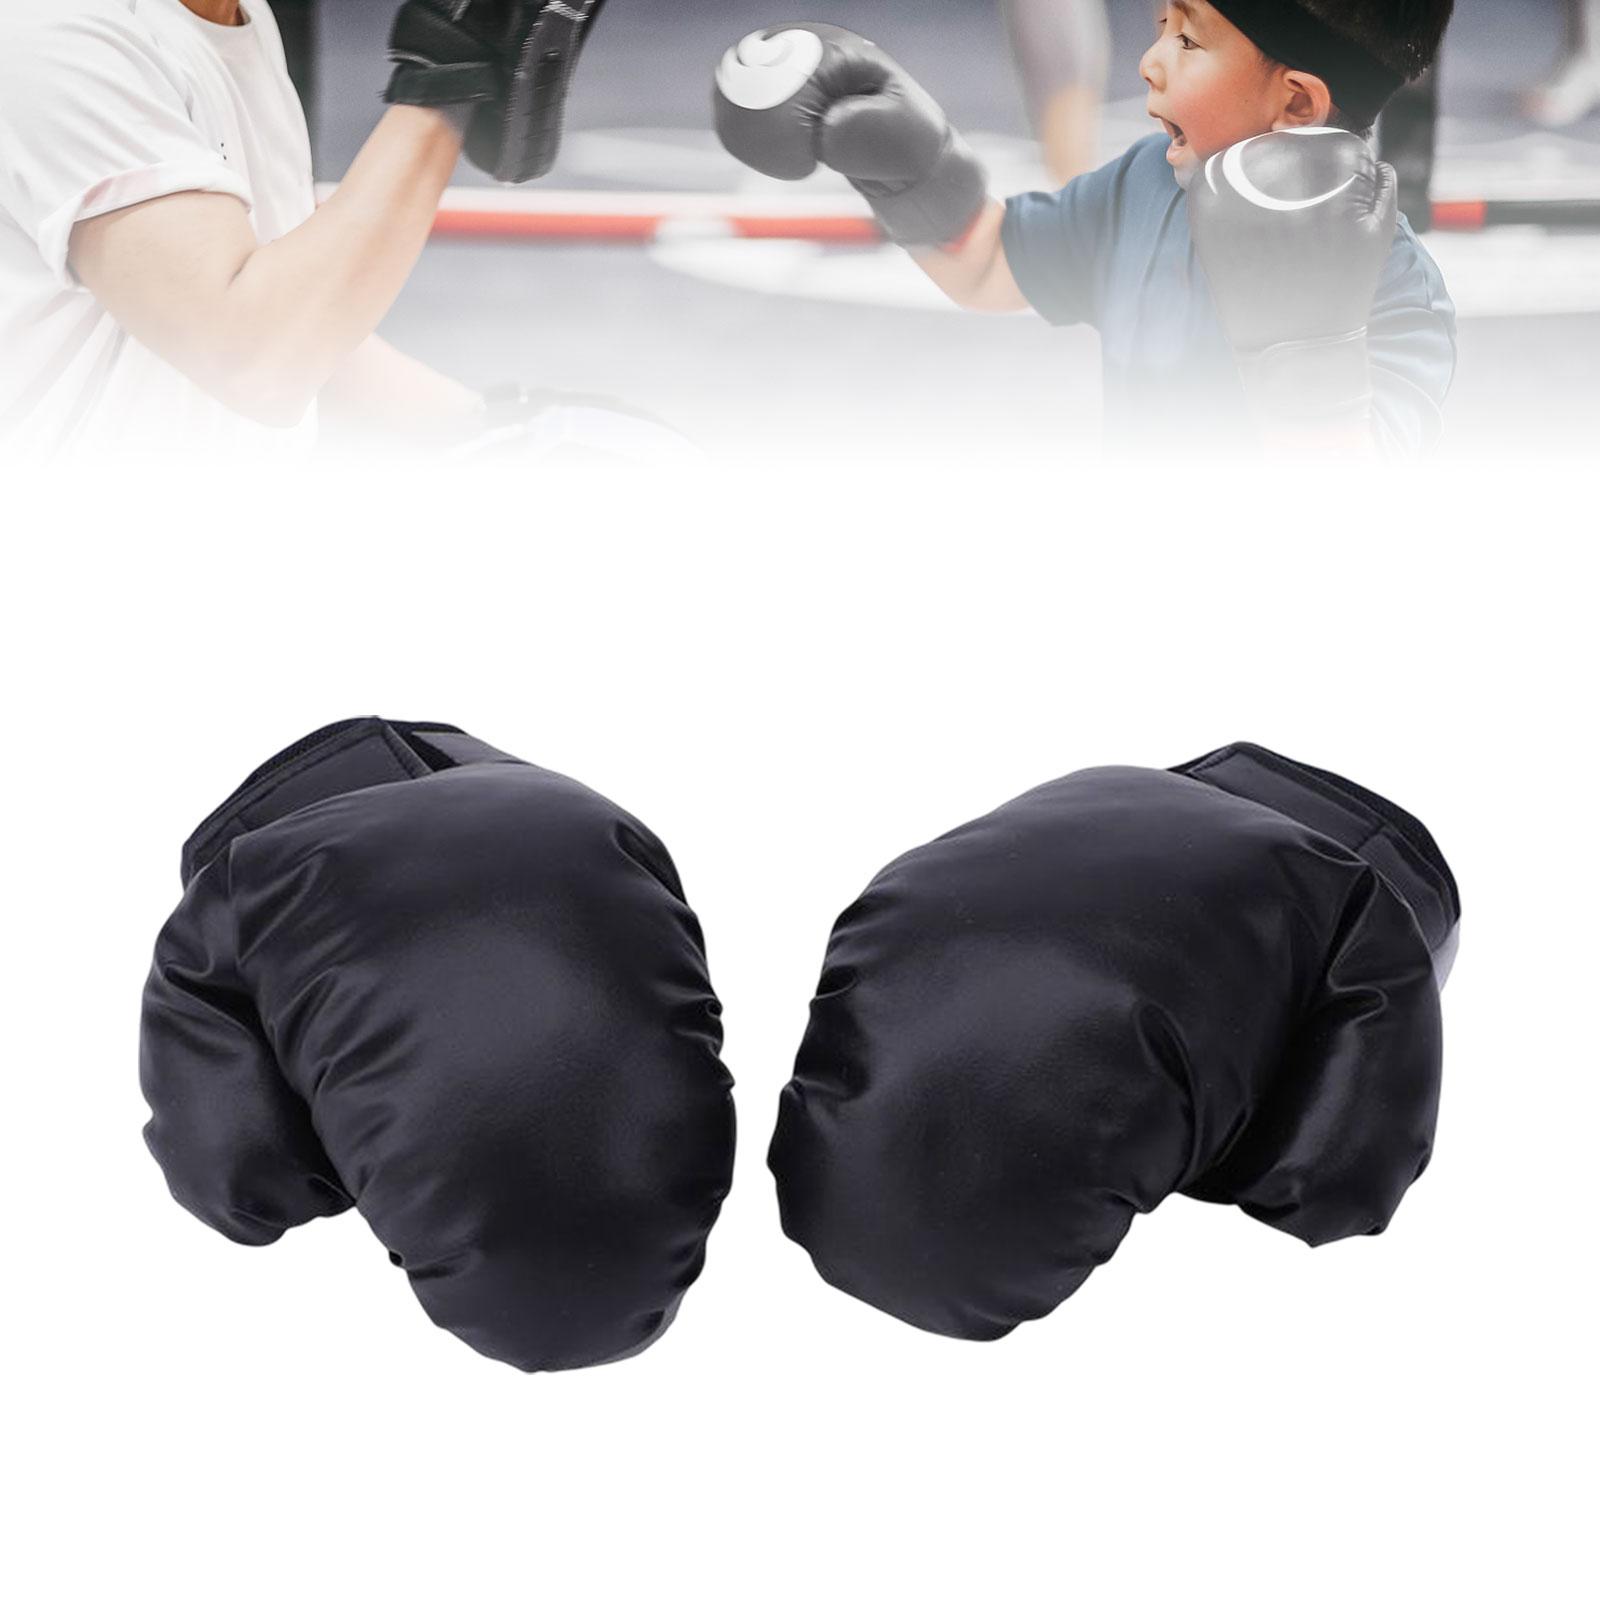 Mma Gloves Fitness Martial Arts Breathable Adult Children Kick Boxing Gloves Black Child